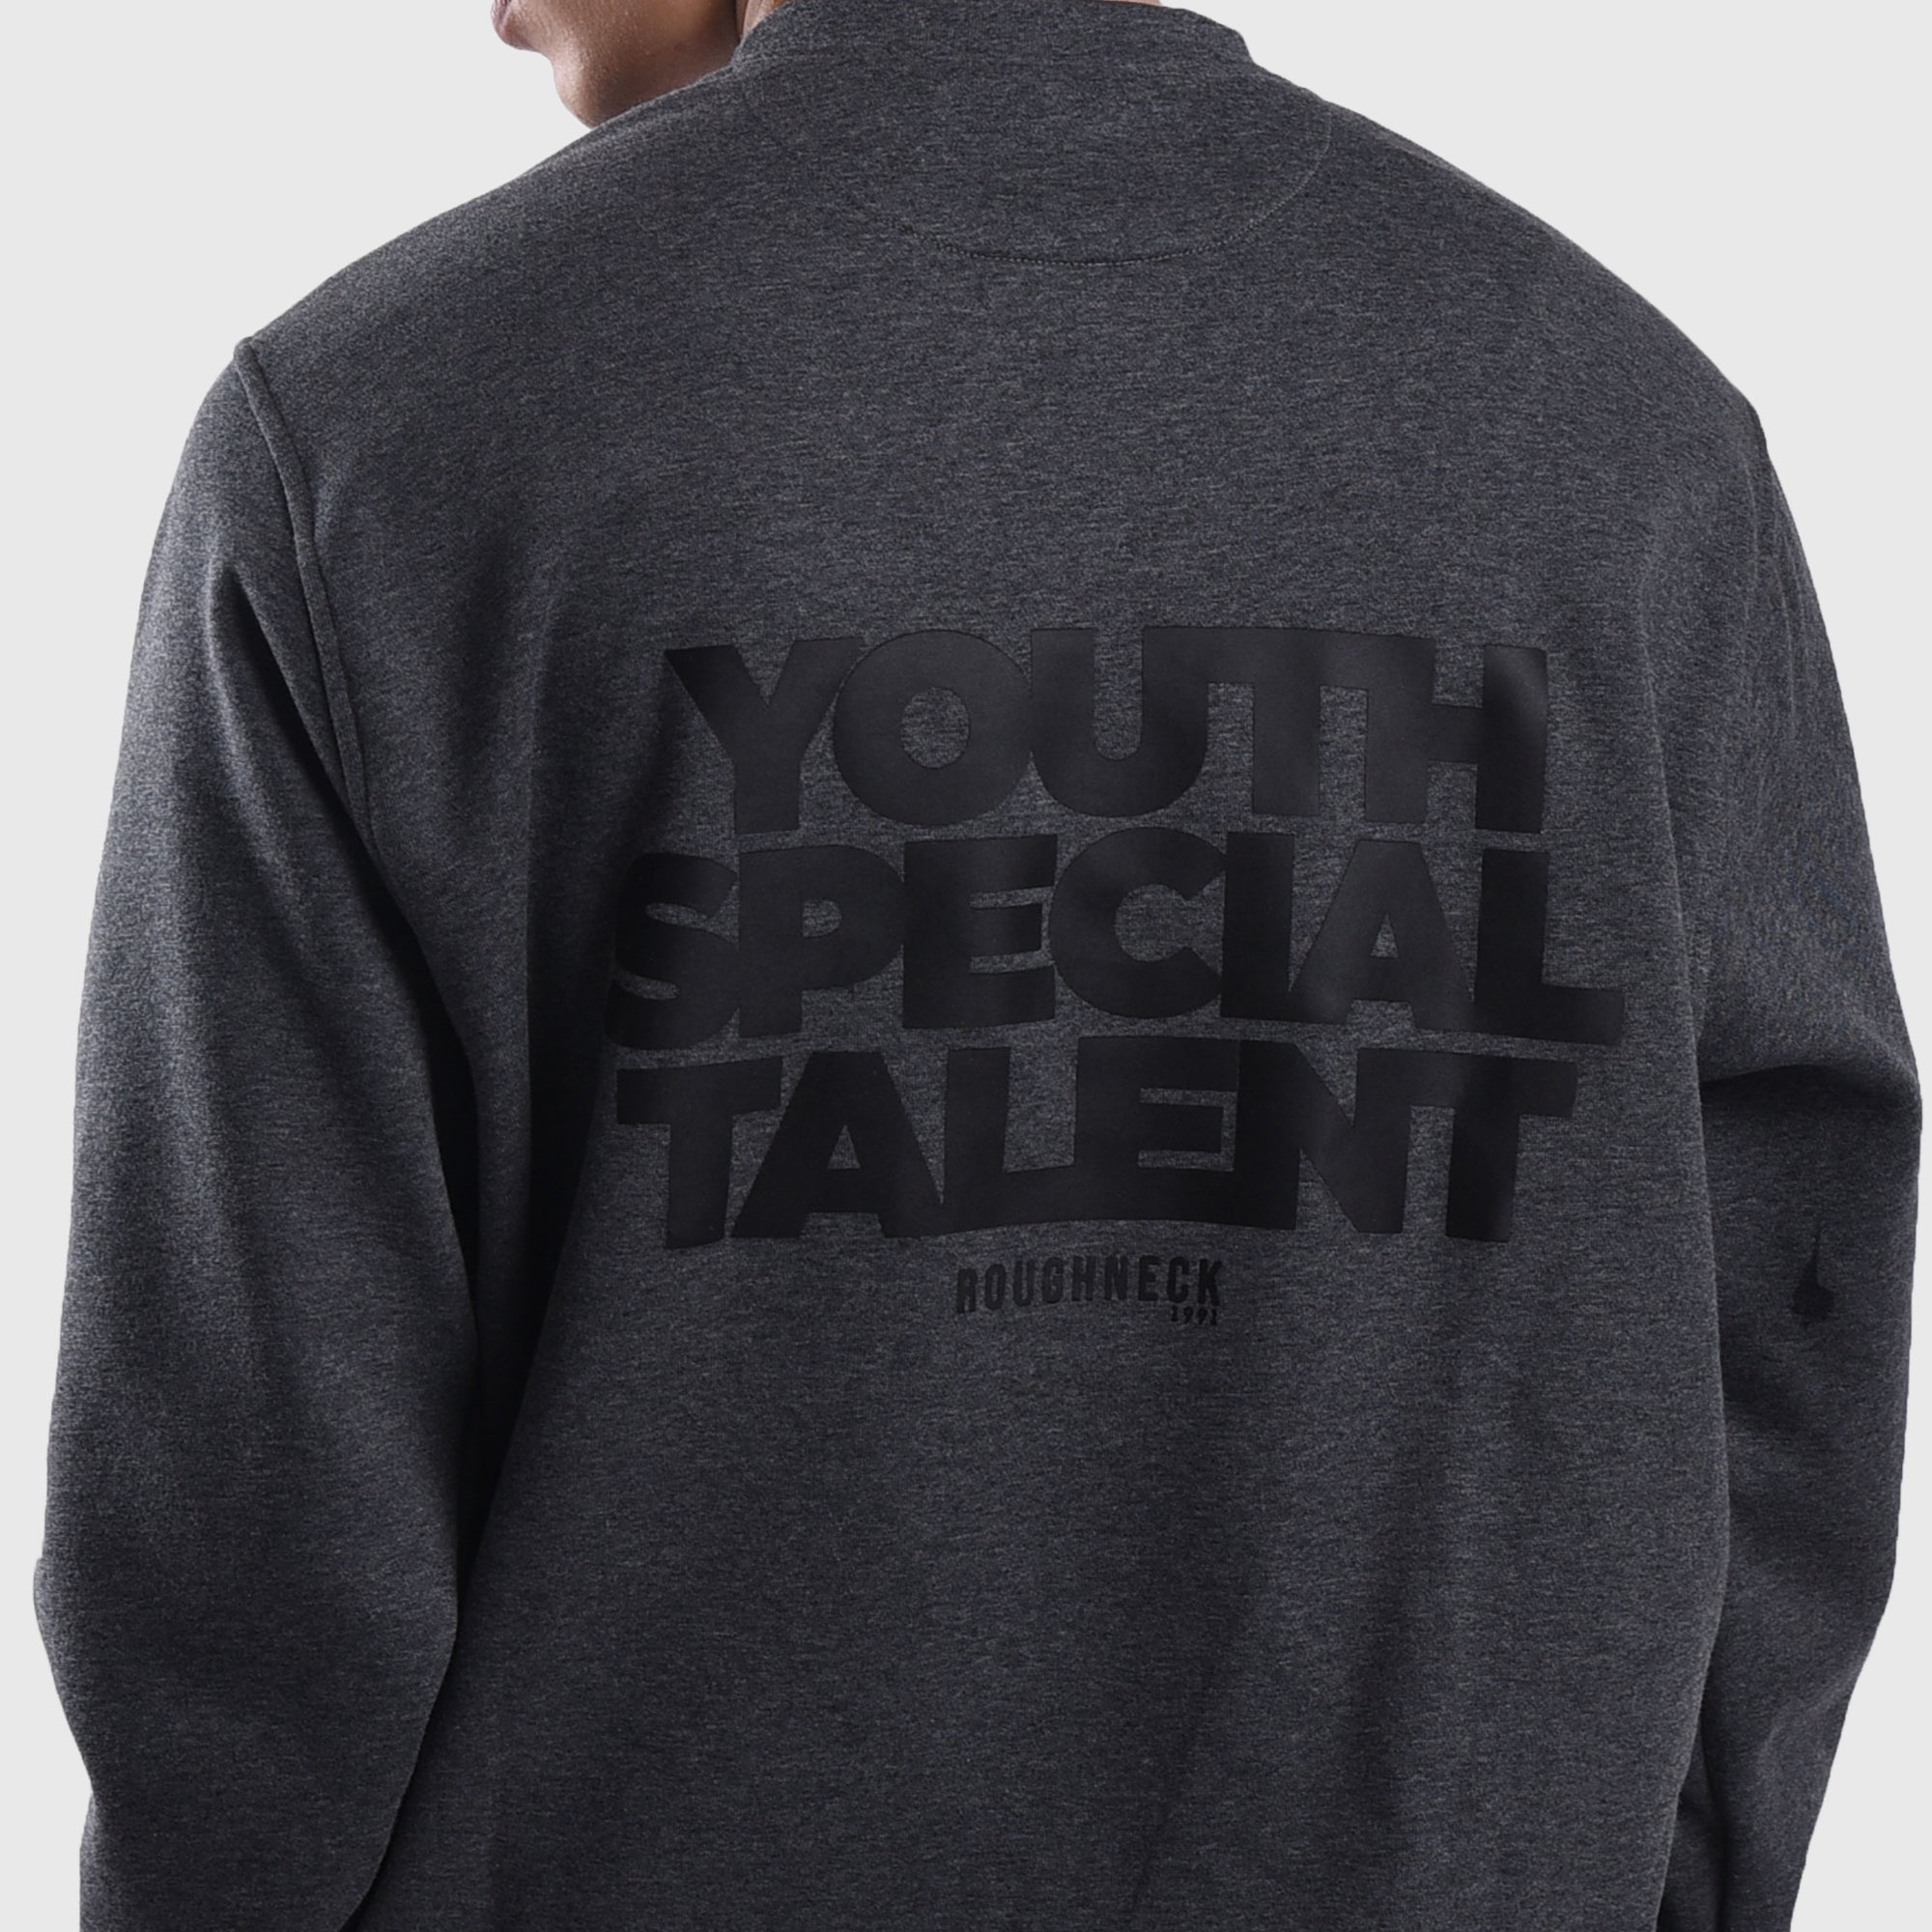 SS474 Grey Youth Talent Crewneck